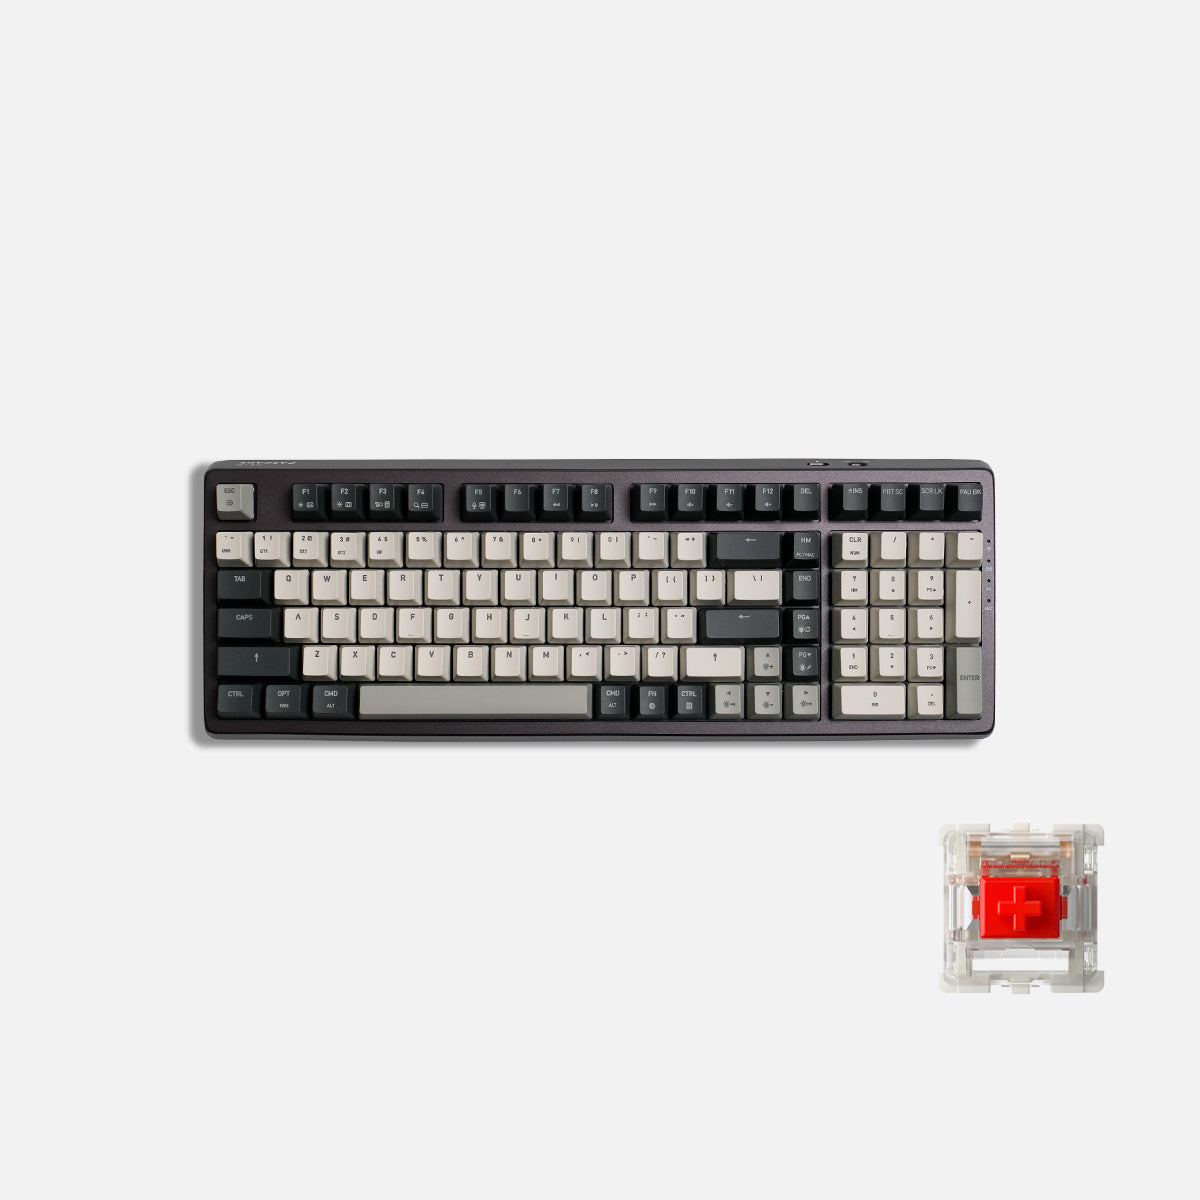 Cascade 98% keyboard hot-swappable nirkabel